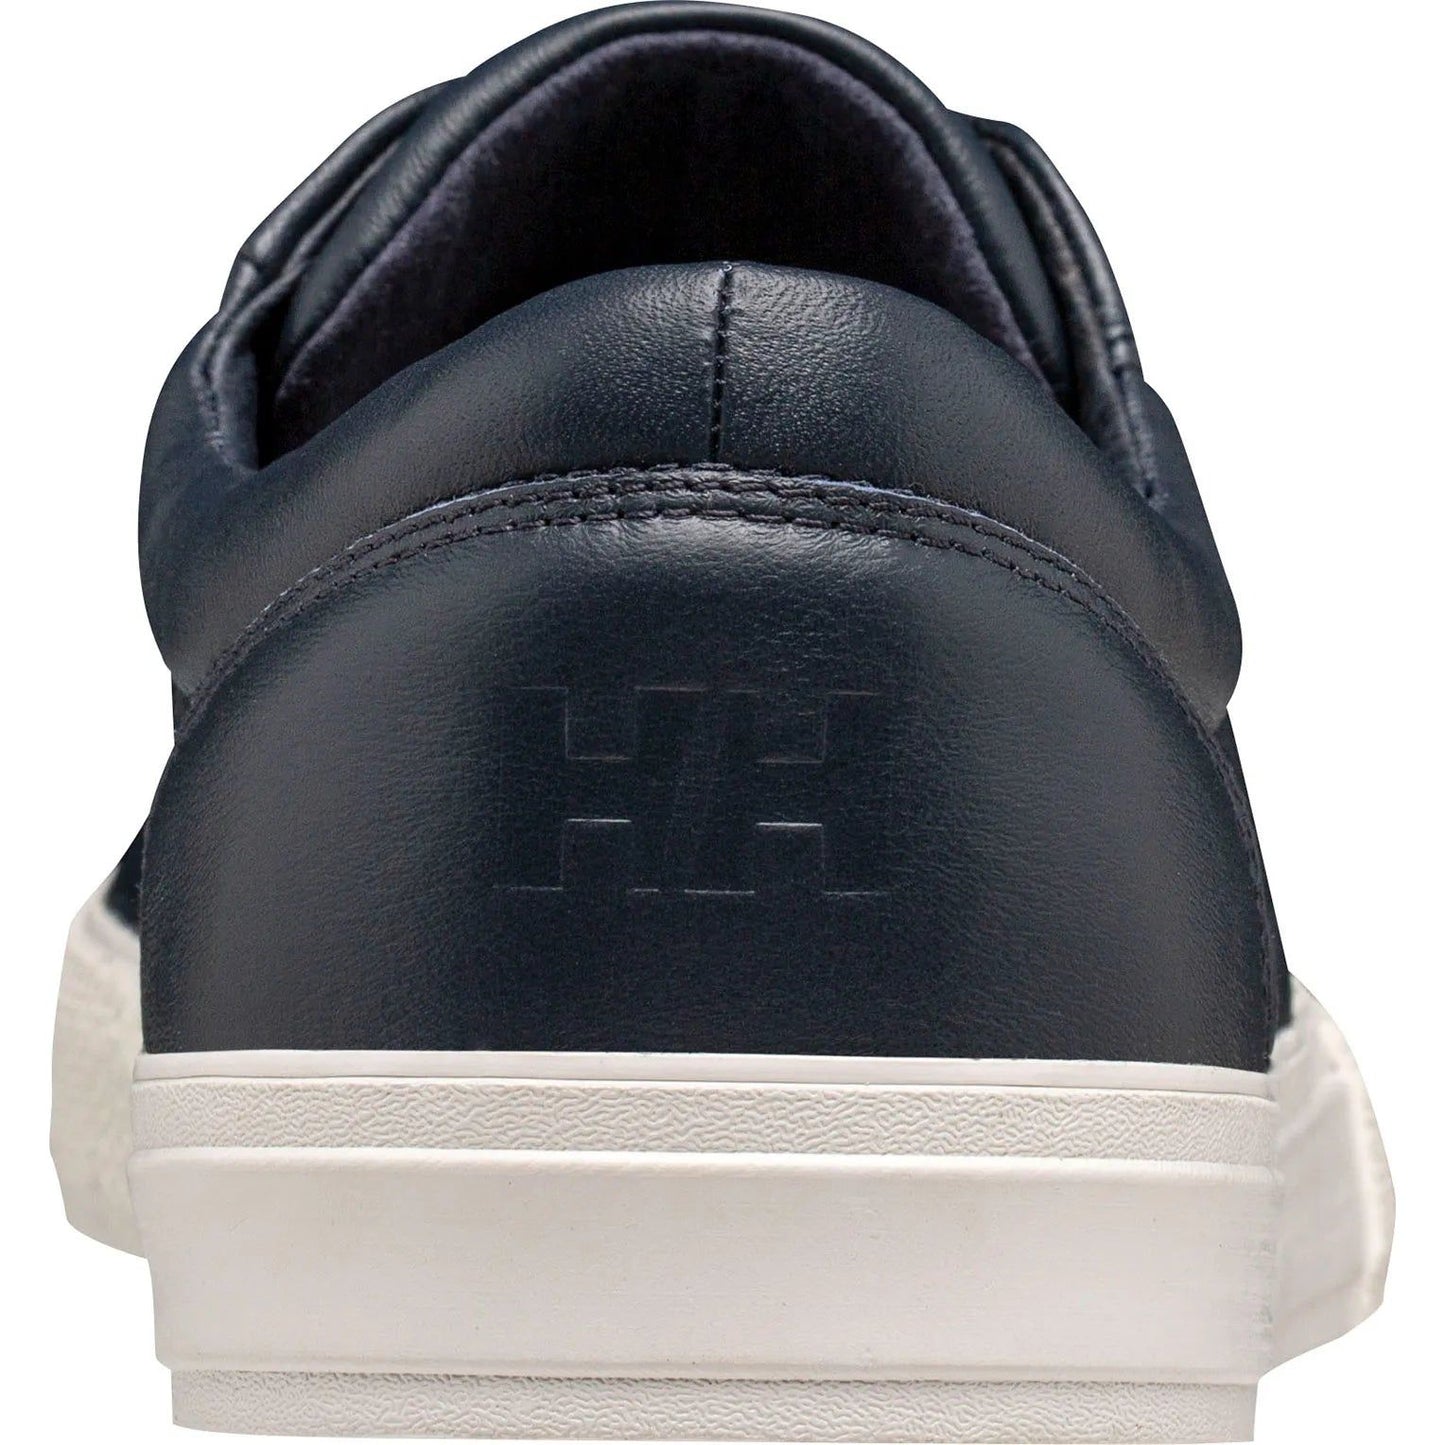 Helly Hansen Men's Fjord Canvas Shoe Navy/Offwhite